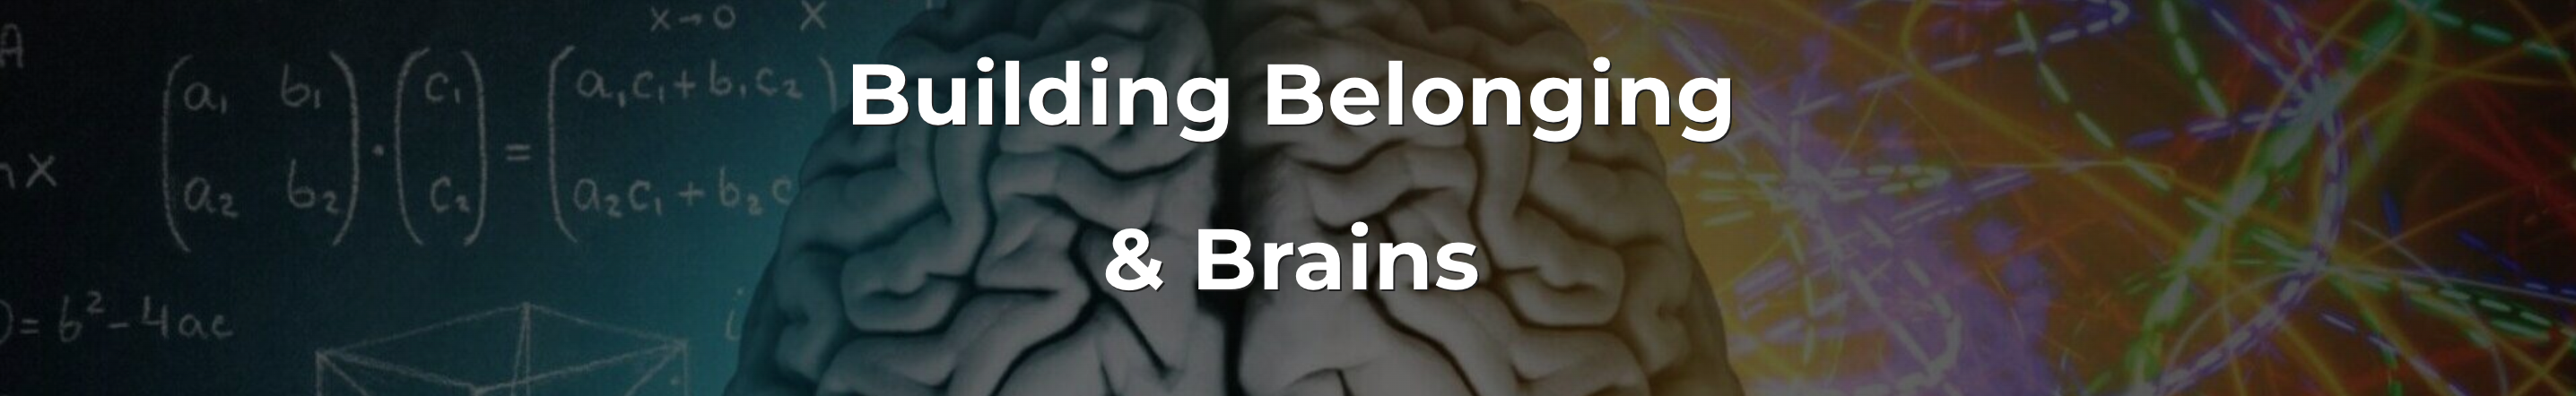 Building Belonging & Brains